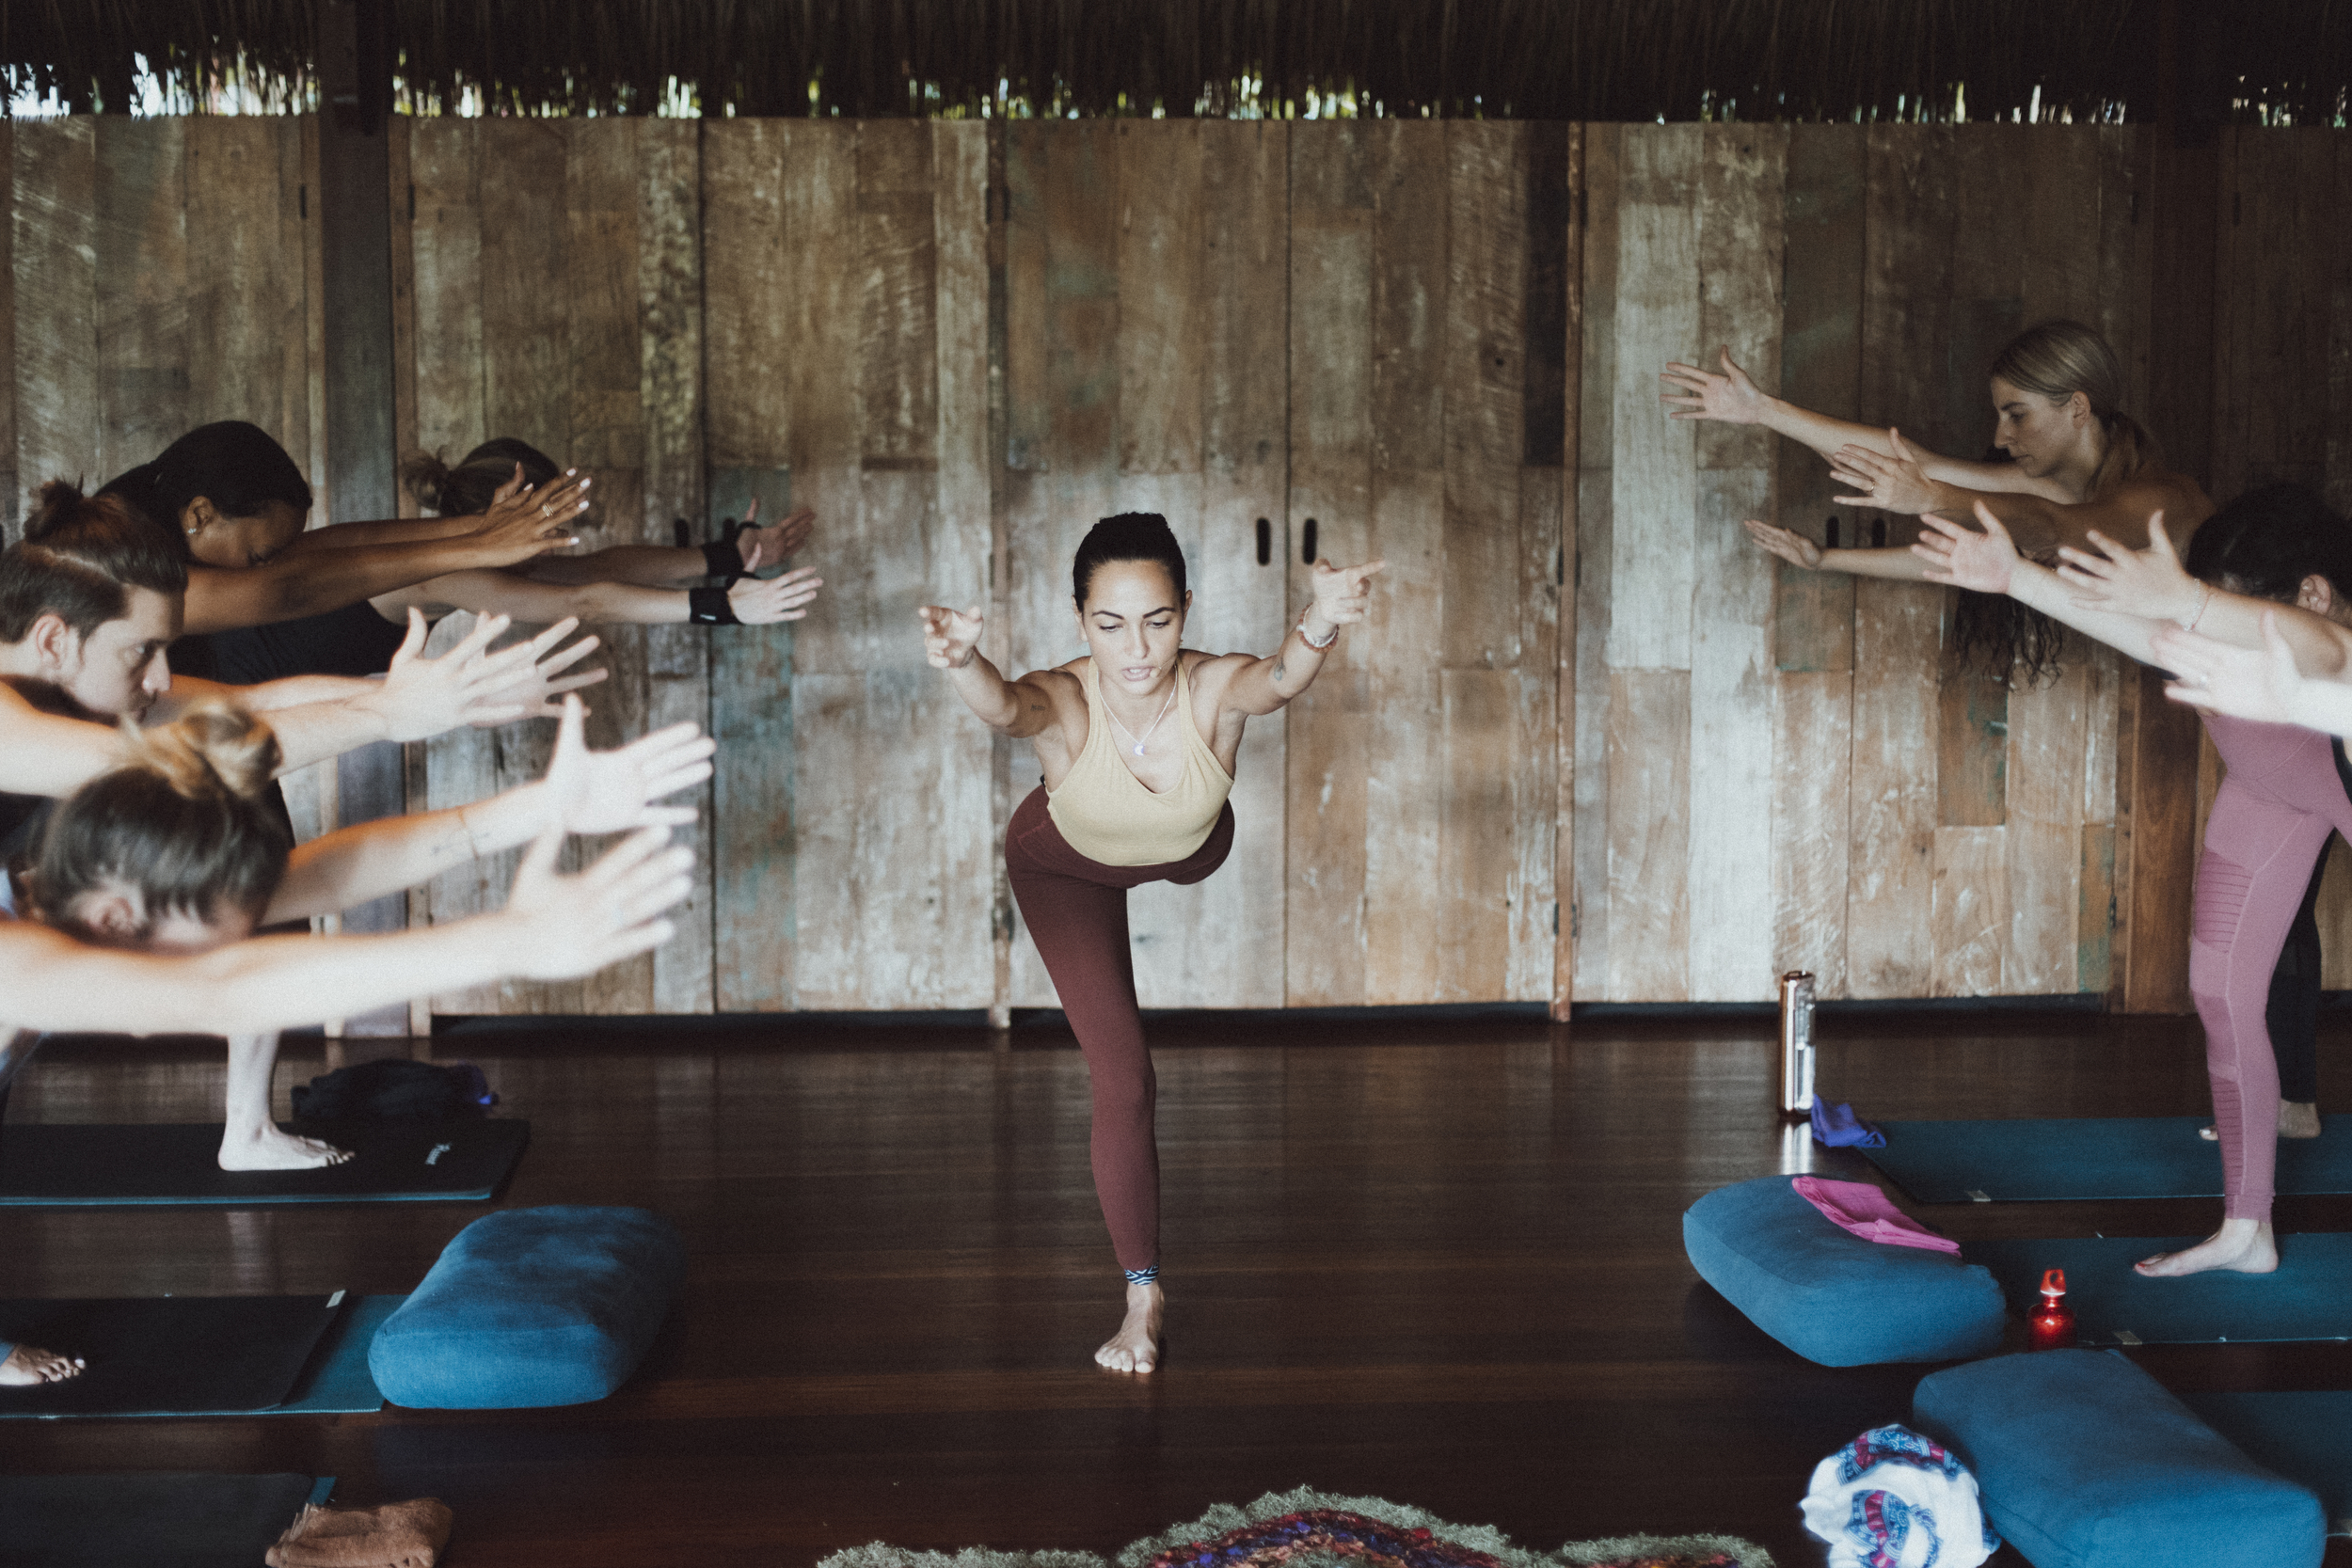 Katia Repina on Using Yoga and Photography for Balance